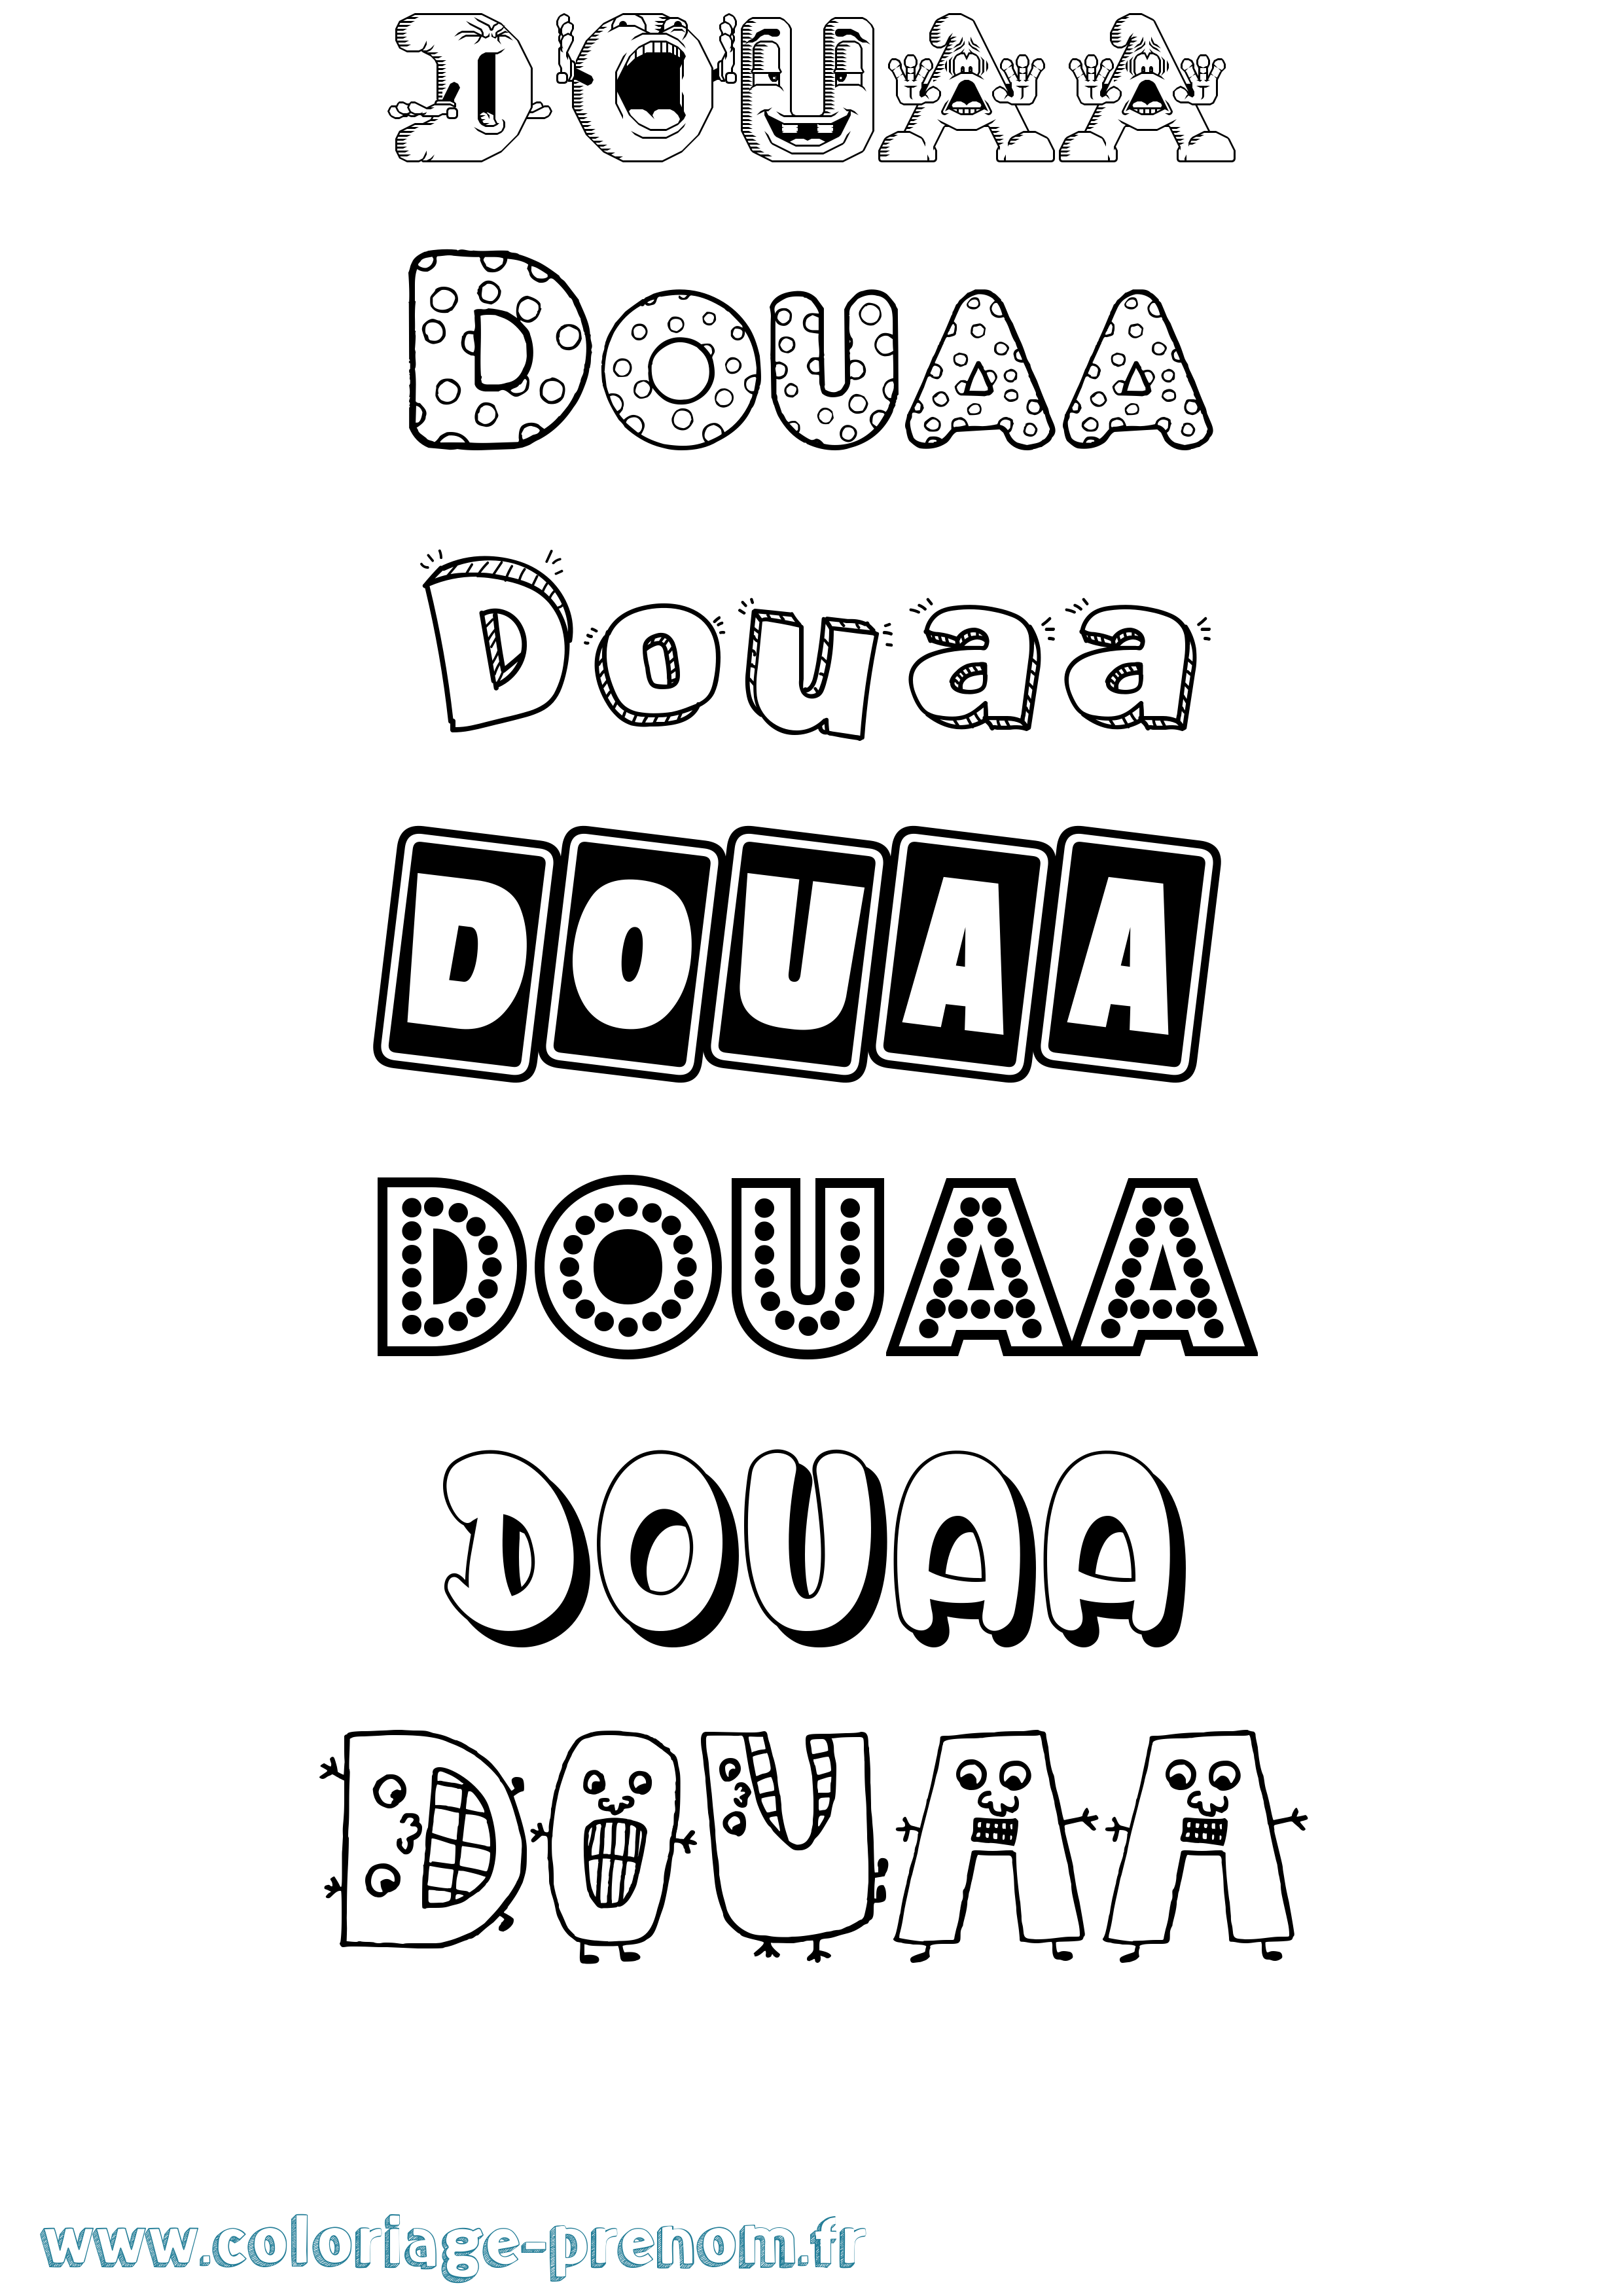 Coloriage prénom Douaa Fun